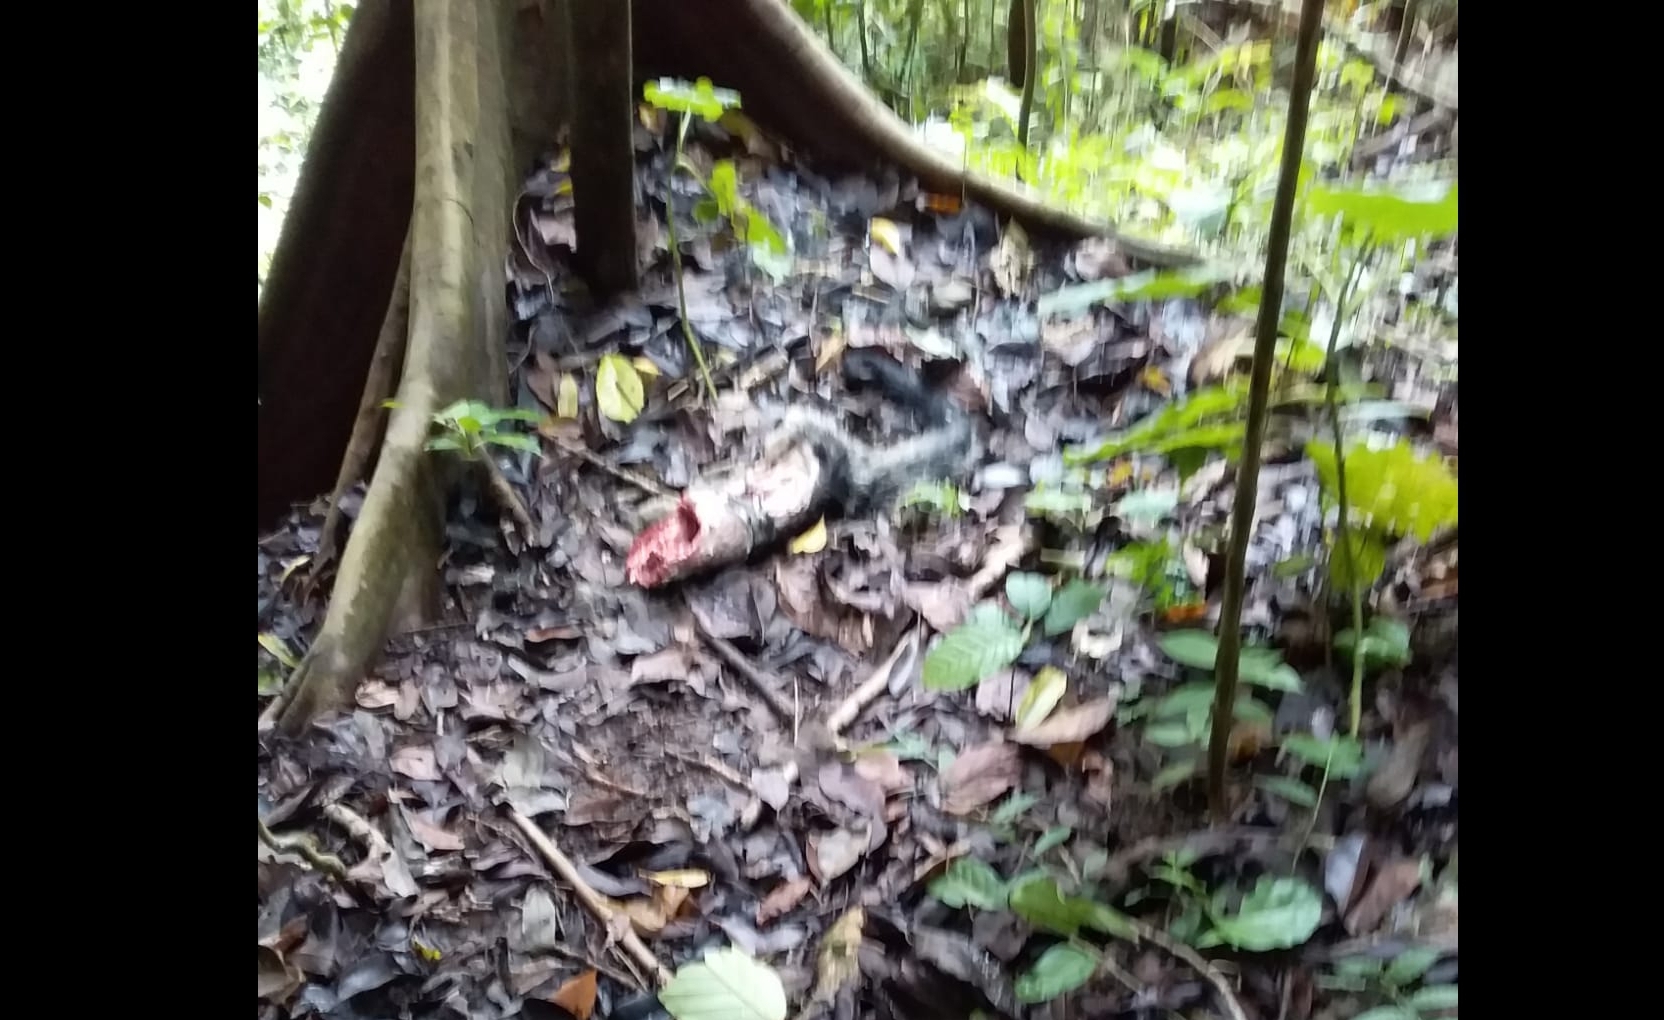 Ditemukan Bangkai Hewan, Diduga Dimangsa Macan Tutul di Gunungmanik Kuningan, Tak Jauh dari Lokasi Camera Trap